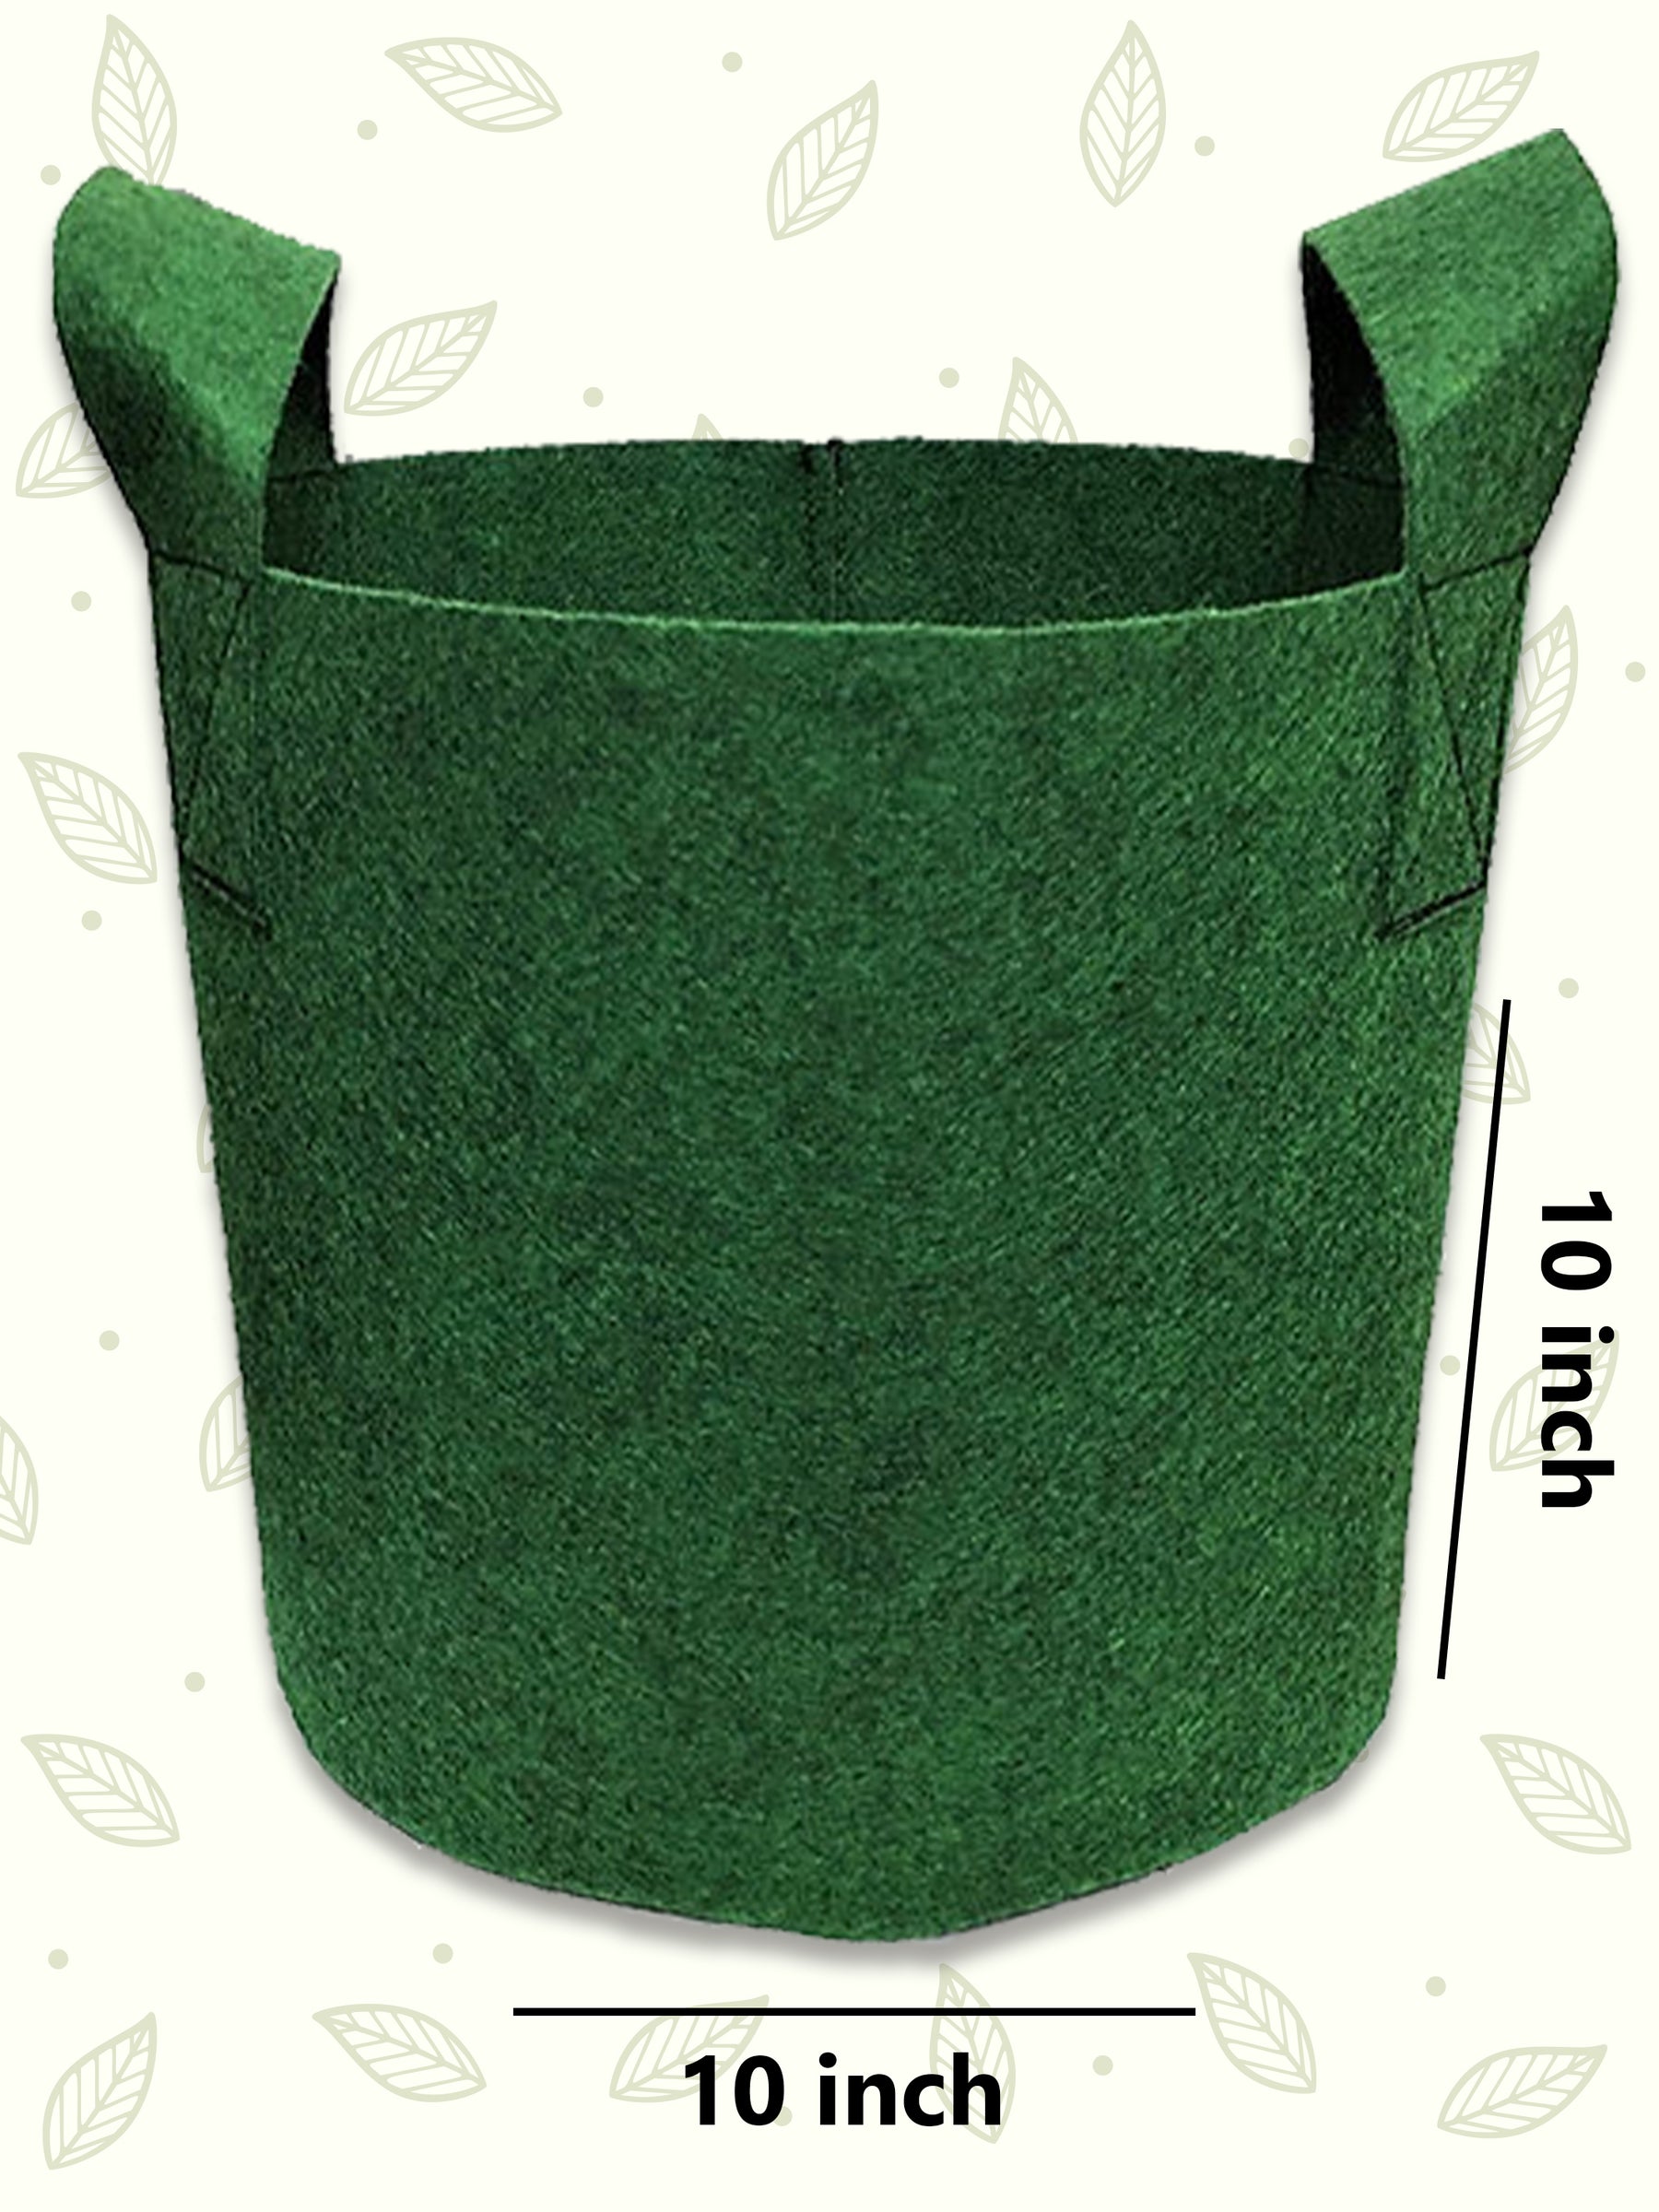 Grow Bags | Eco-Friendly Geo Fabric